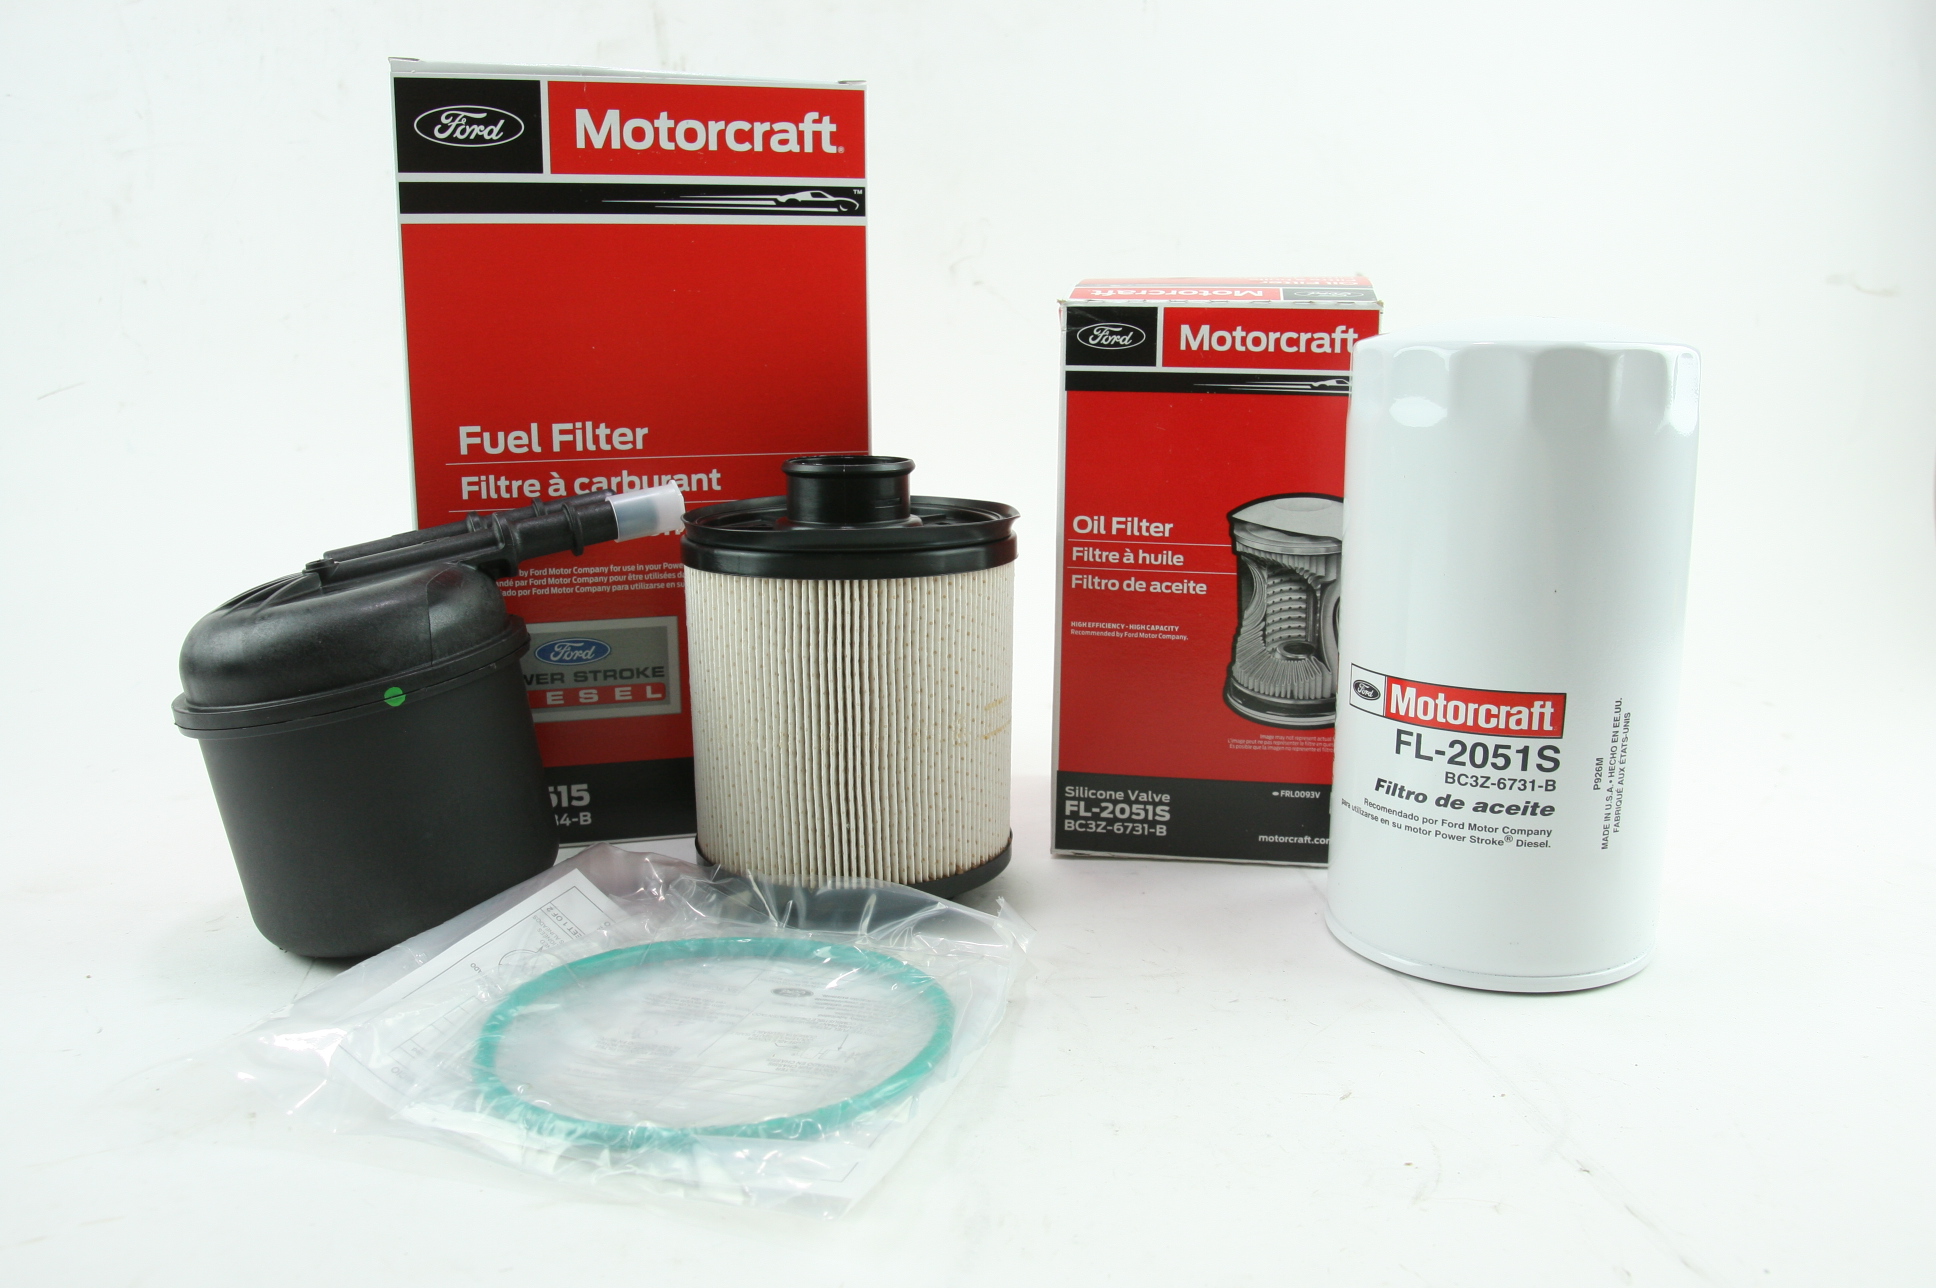 Diesel Fuel & Oil Filter Kit Motorcraft FD4615 FL2051S Genuine OEM Ford Filters - image 1